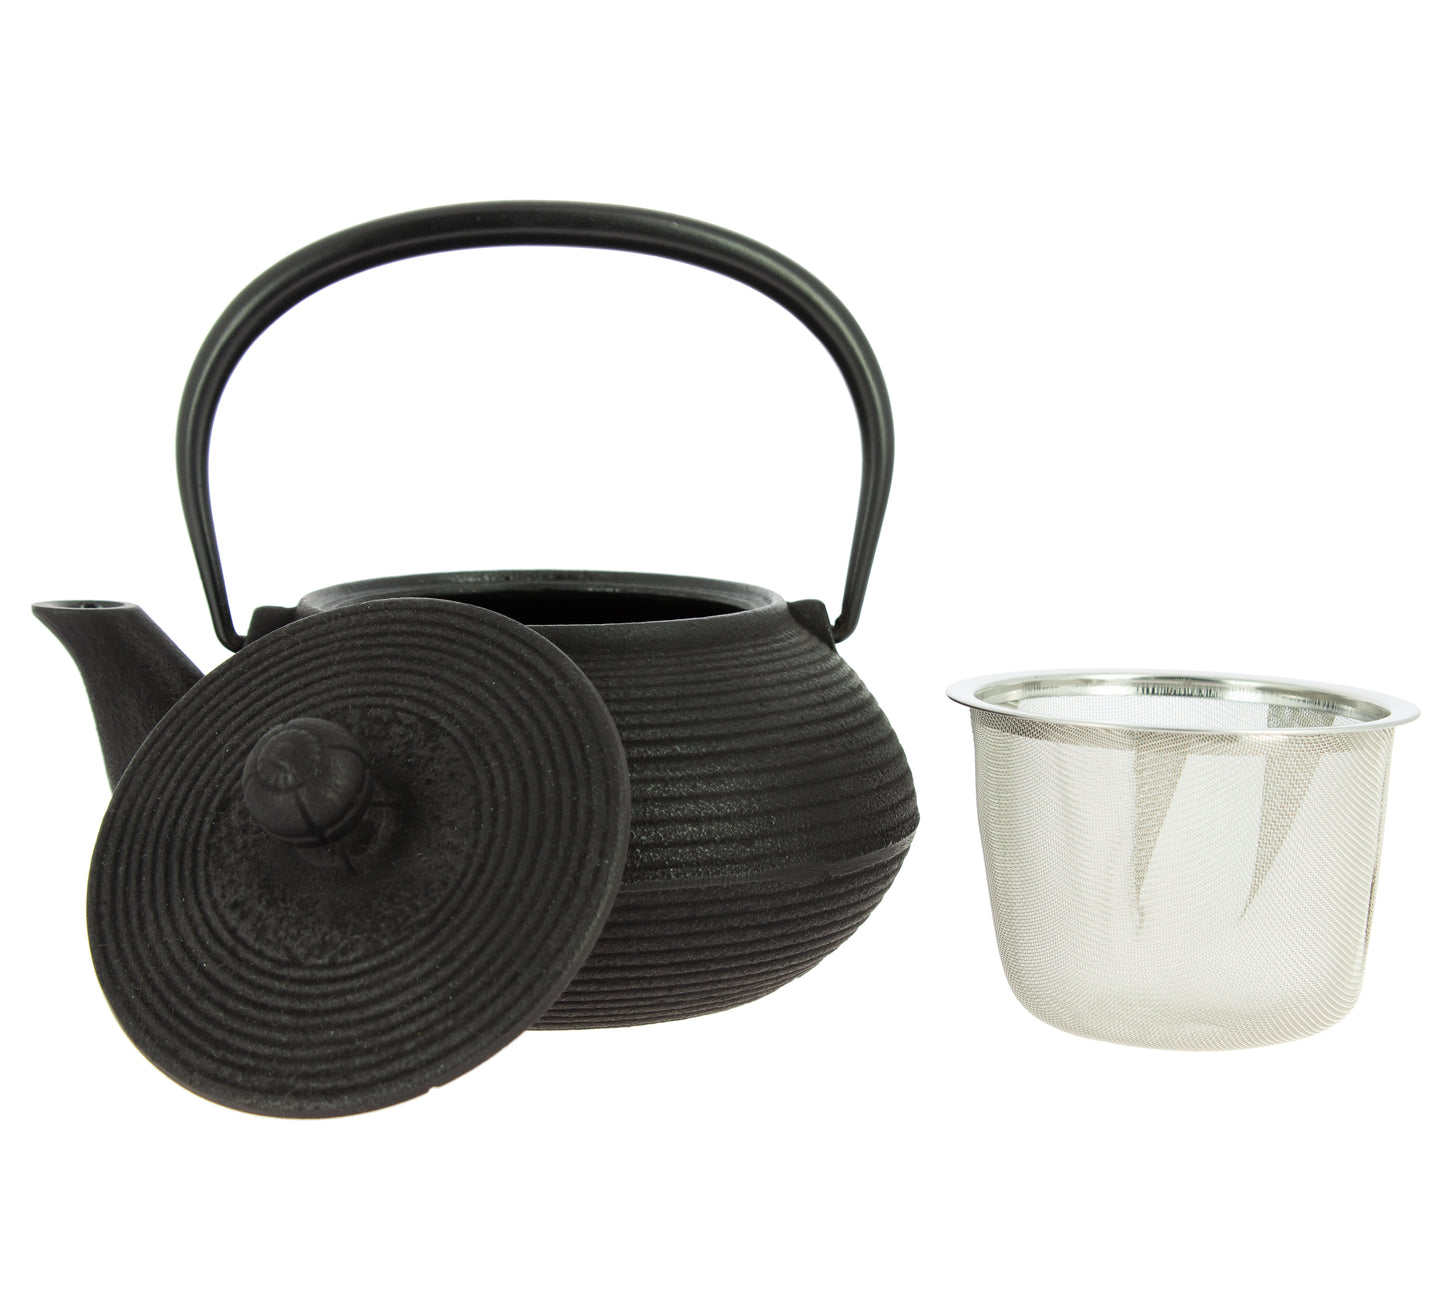 Senbiki Iwachu Teapot - Black, 650 ml